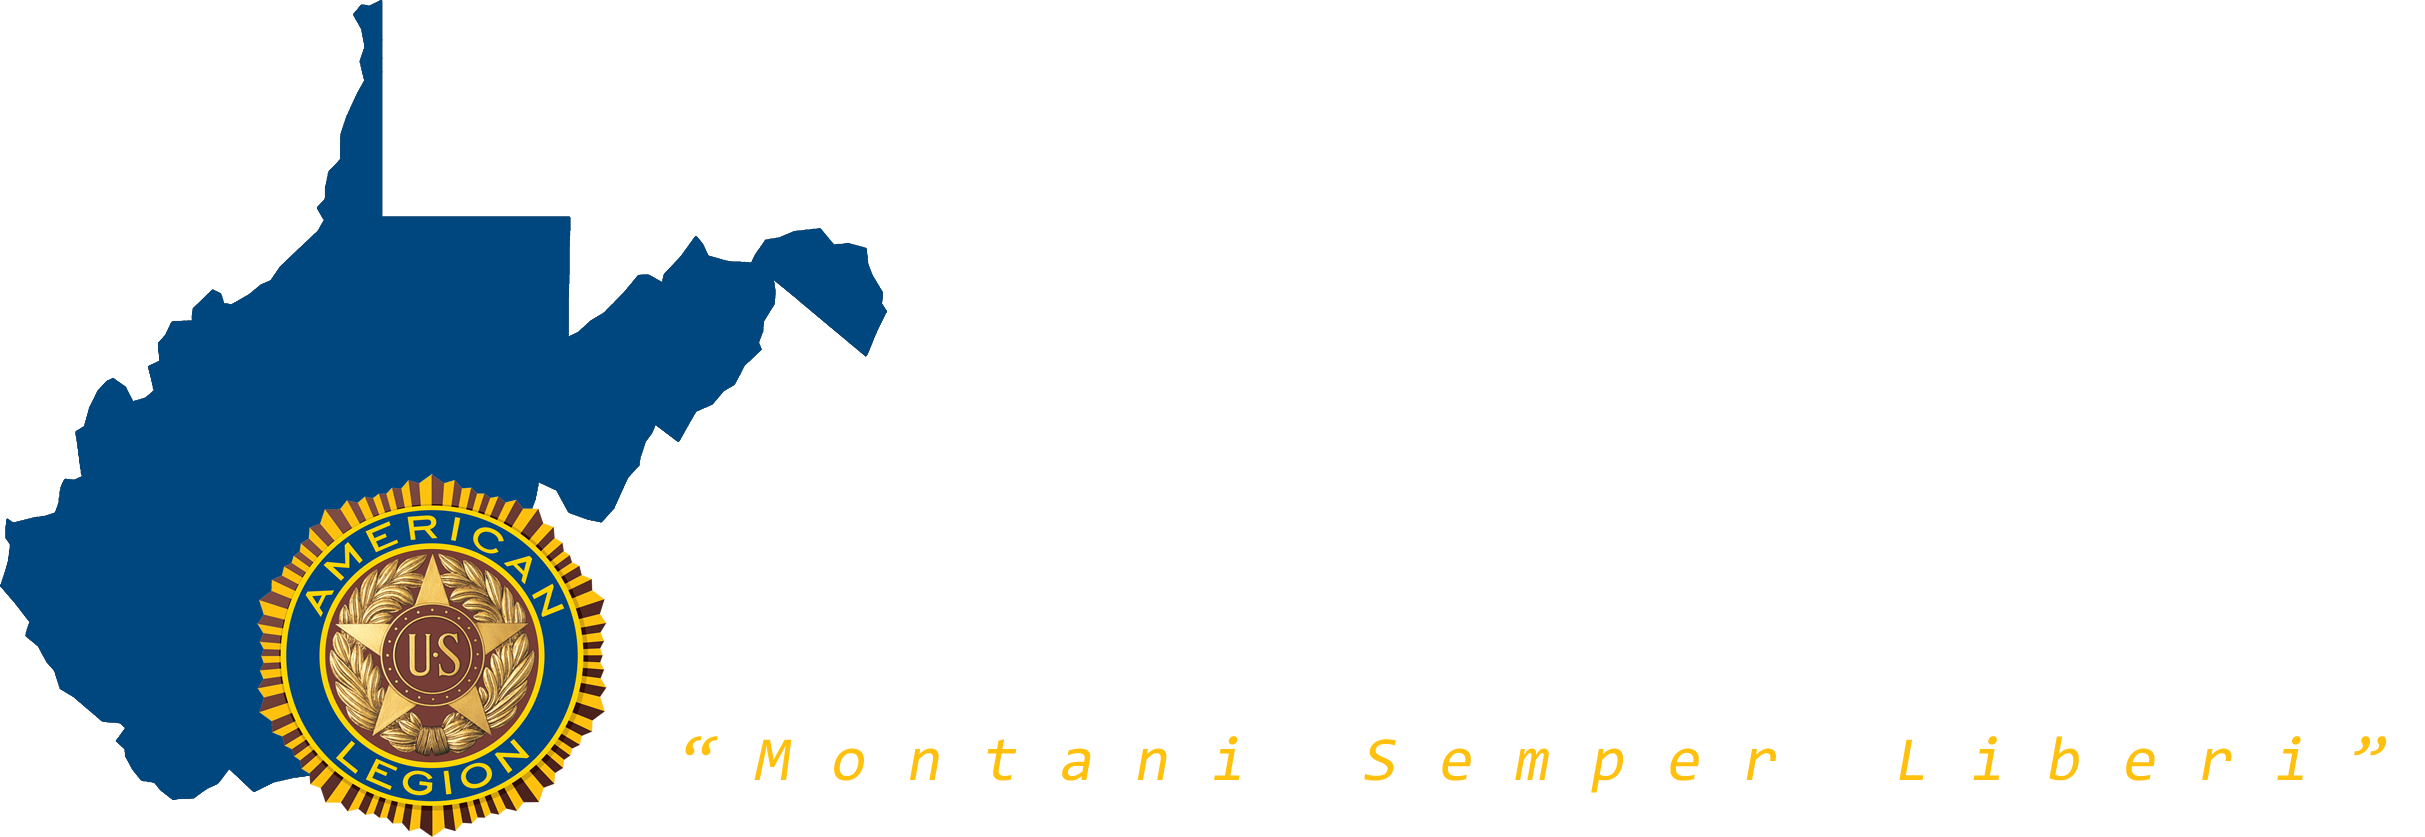 The American Legion Department of West Virginia